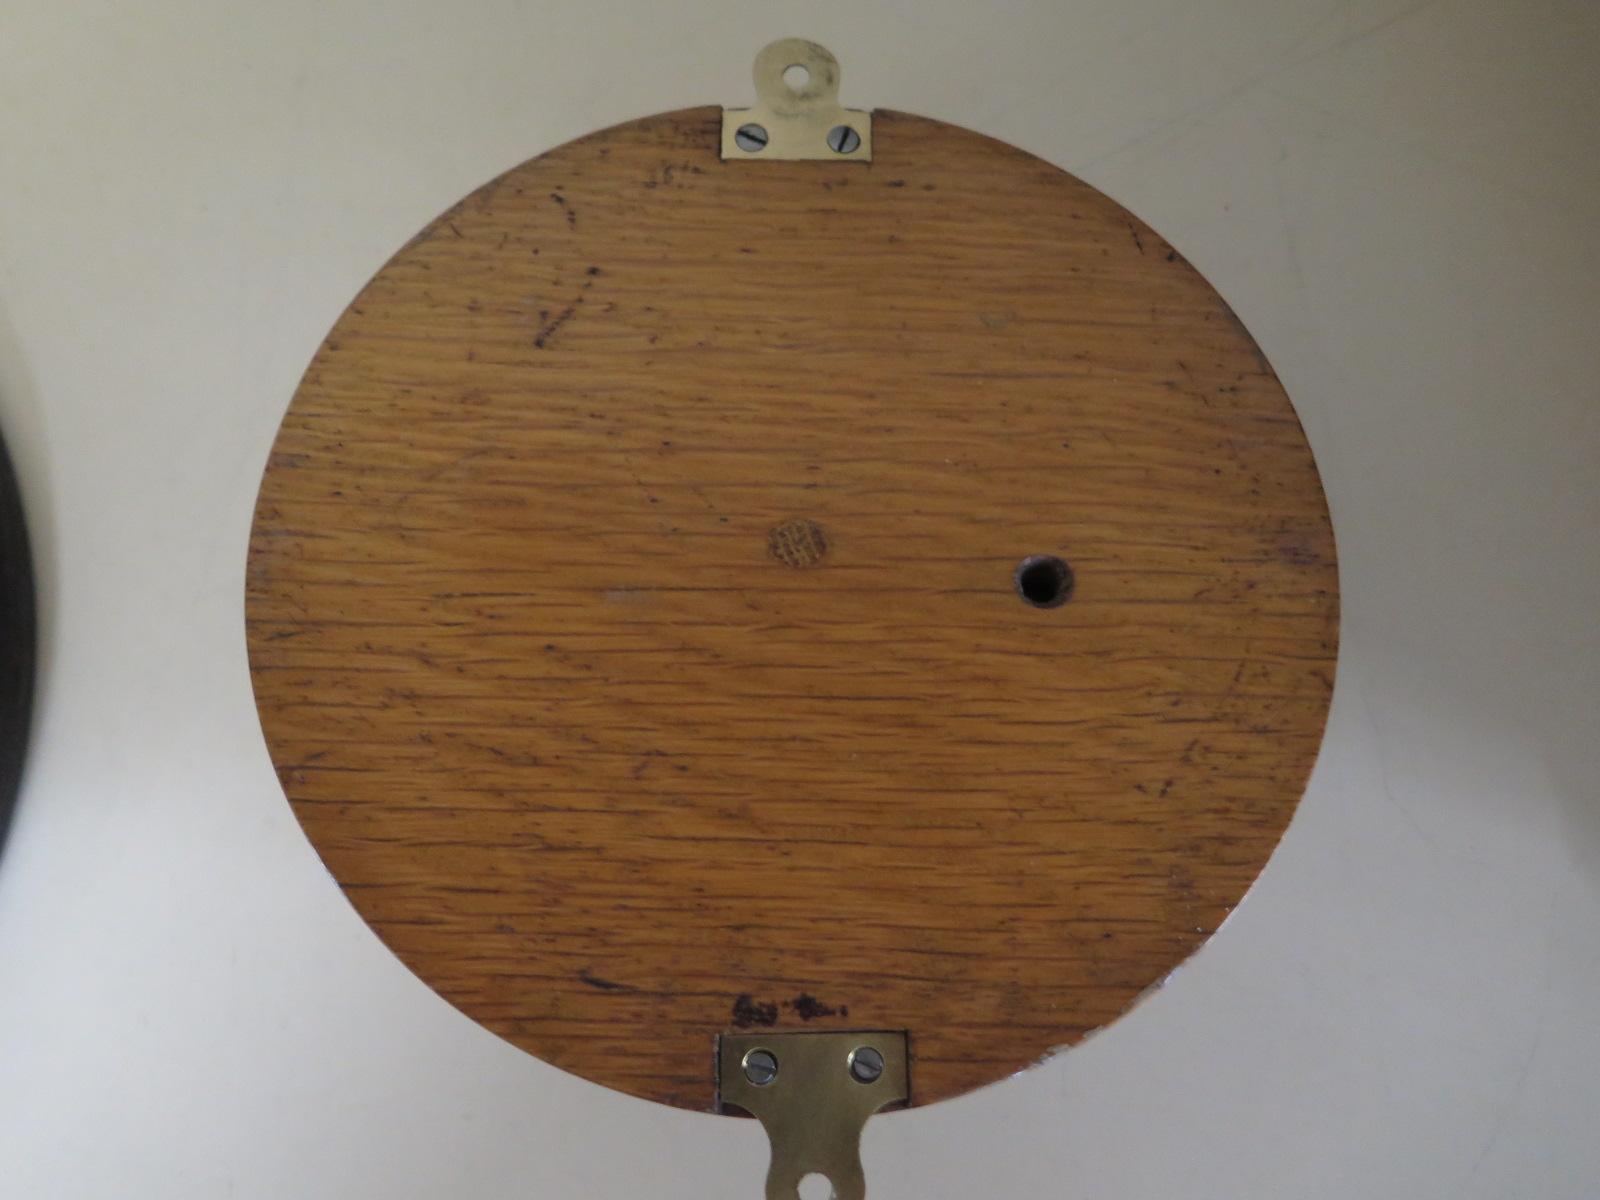 An oak cased aneroid bulkhead barometer by Dolland of London - 17cm diameter - Image 2 of 2